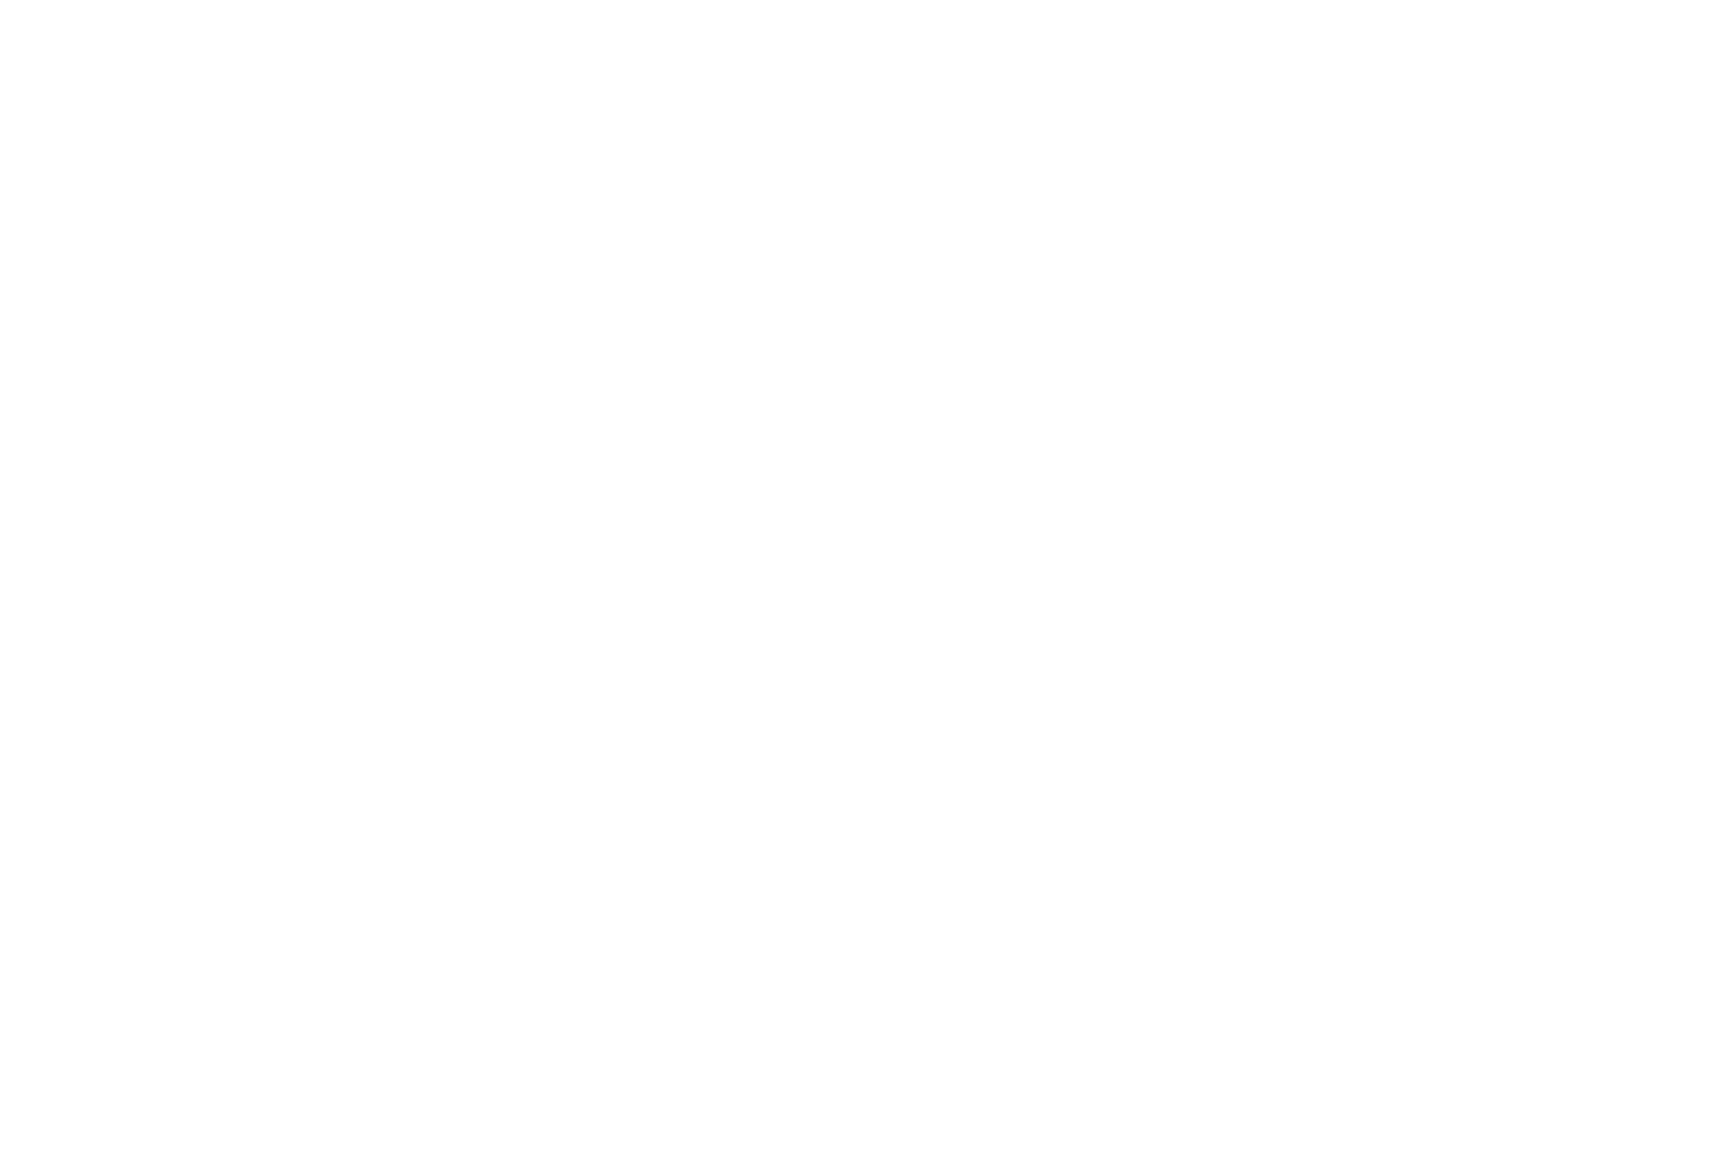 WINNER                             Best One Minute Narrative - Narrative Film Festival - 2021.png